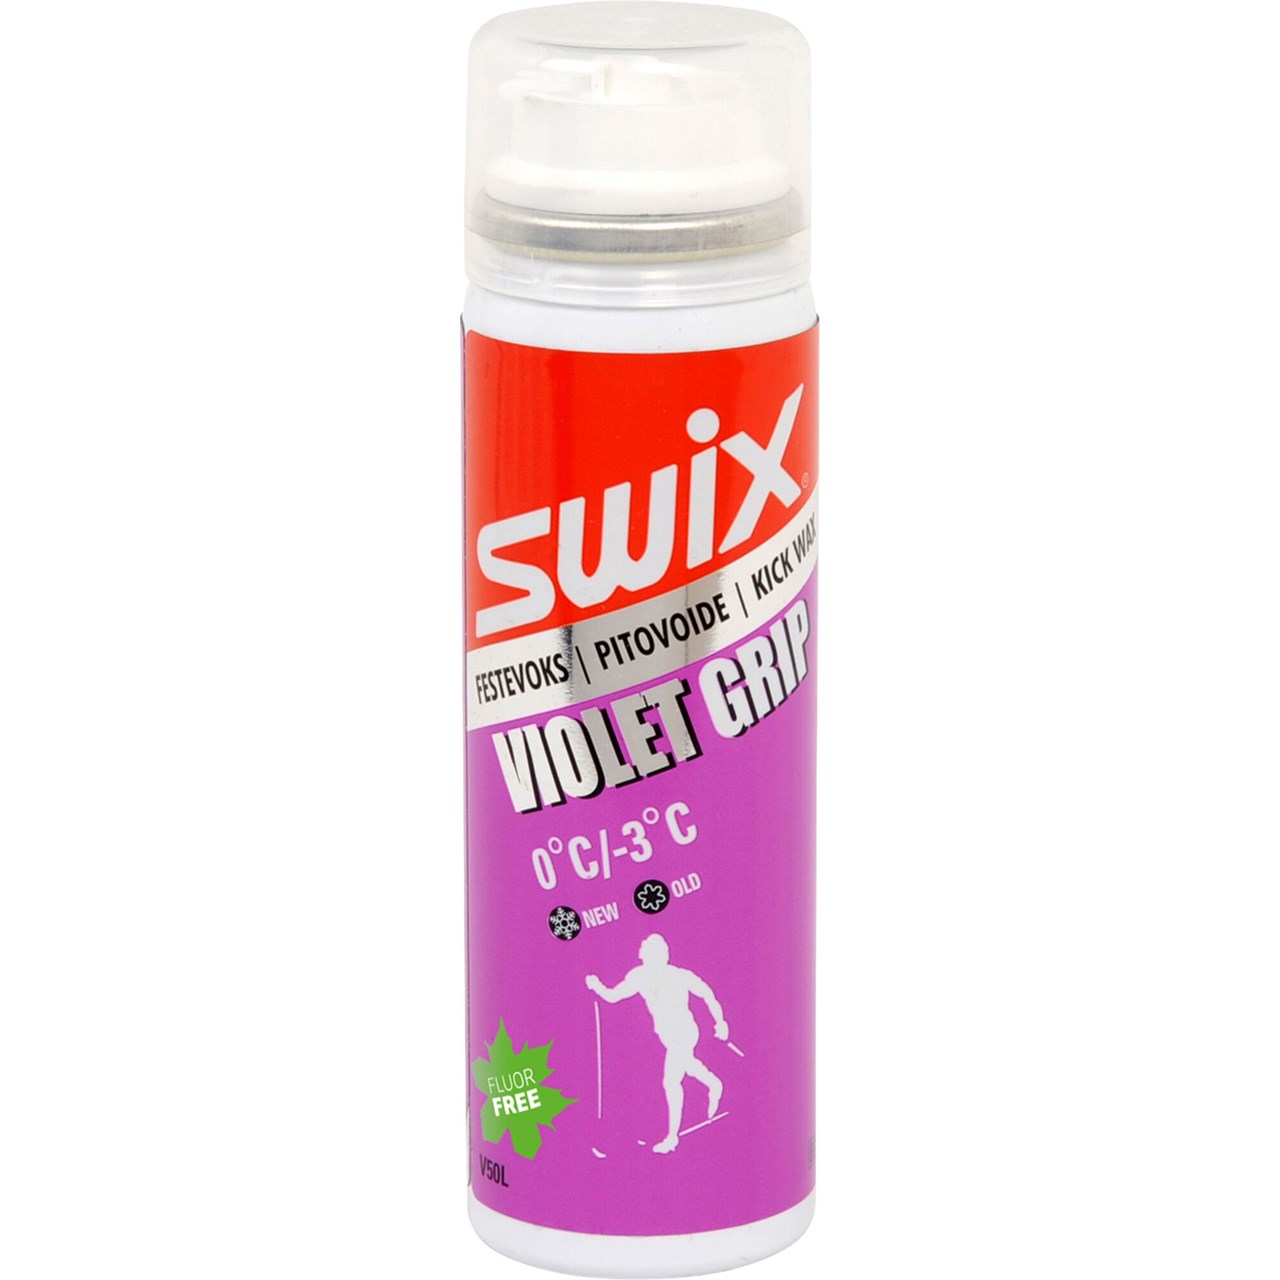 Swix (Easy) Violet Grip 70ml